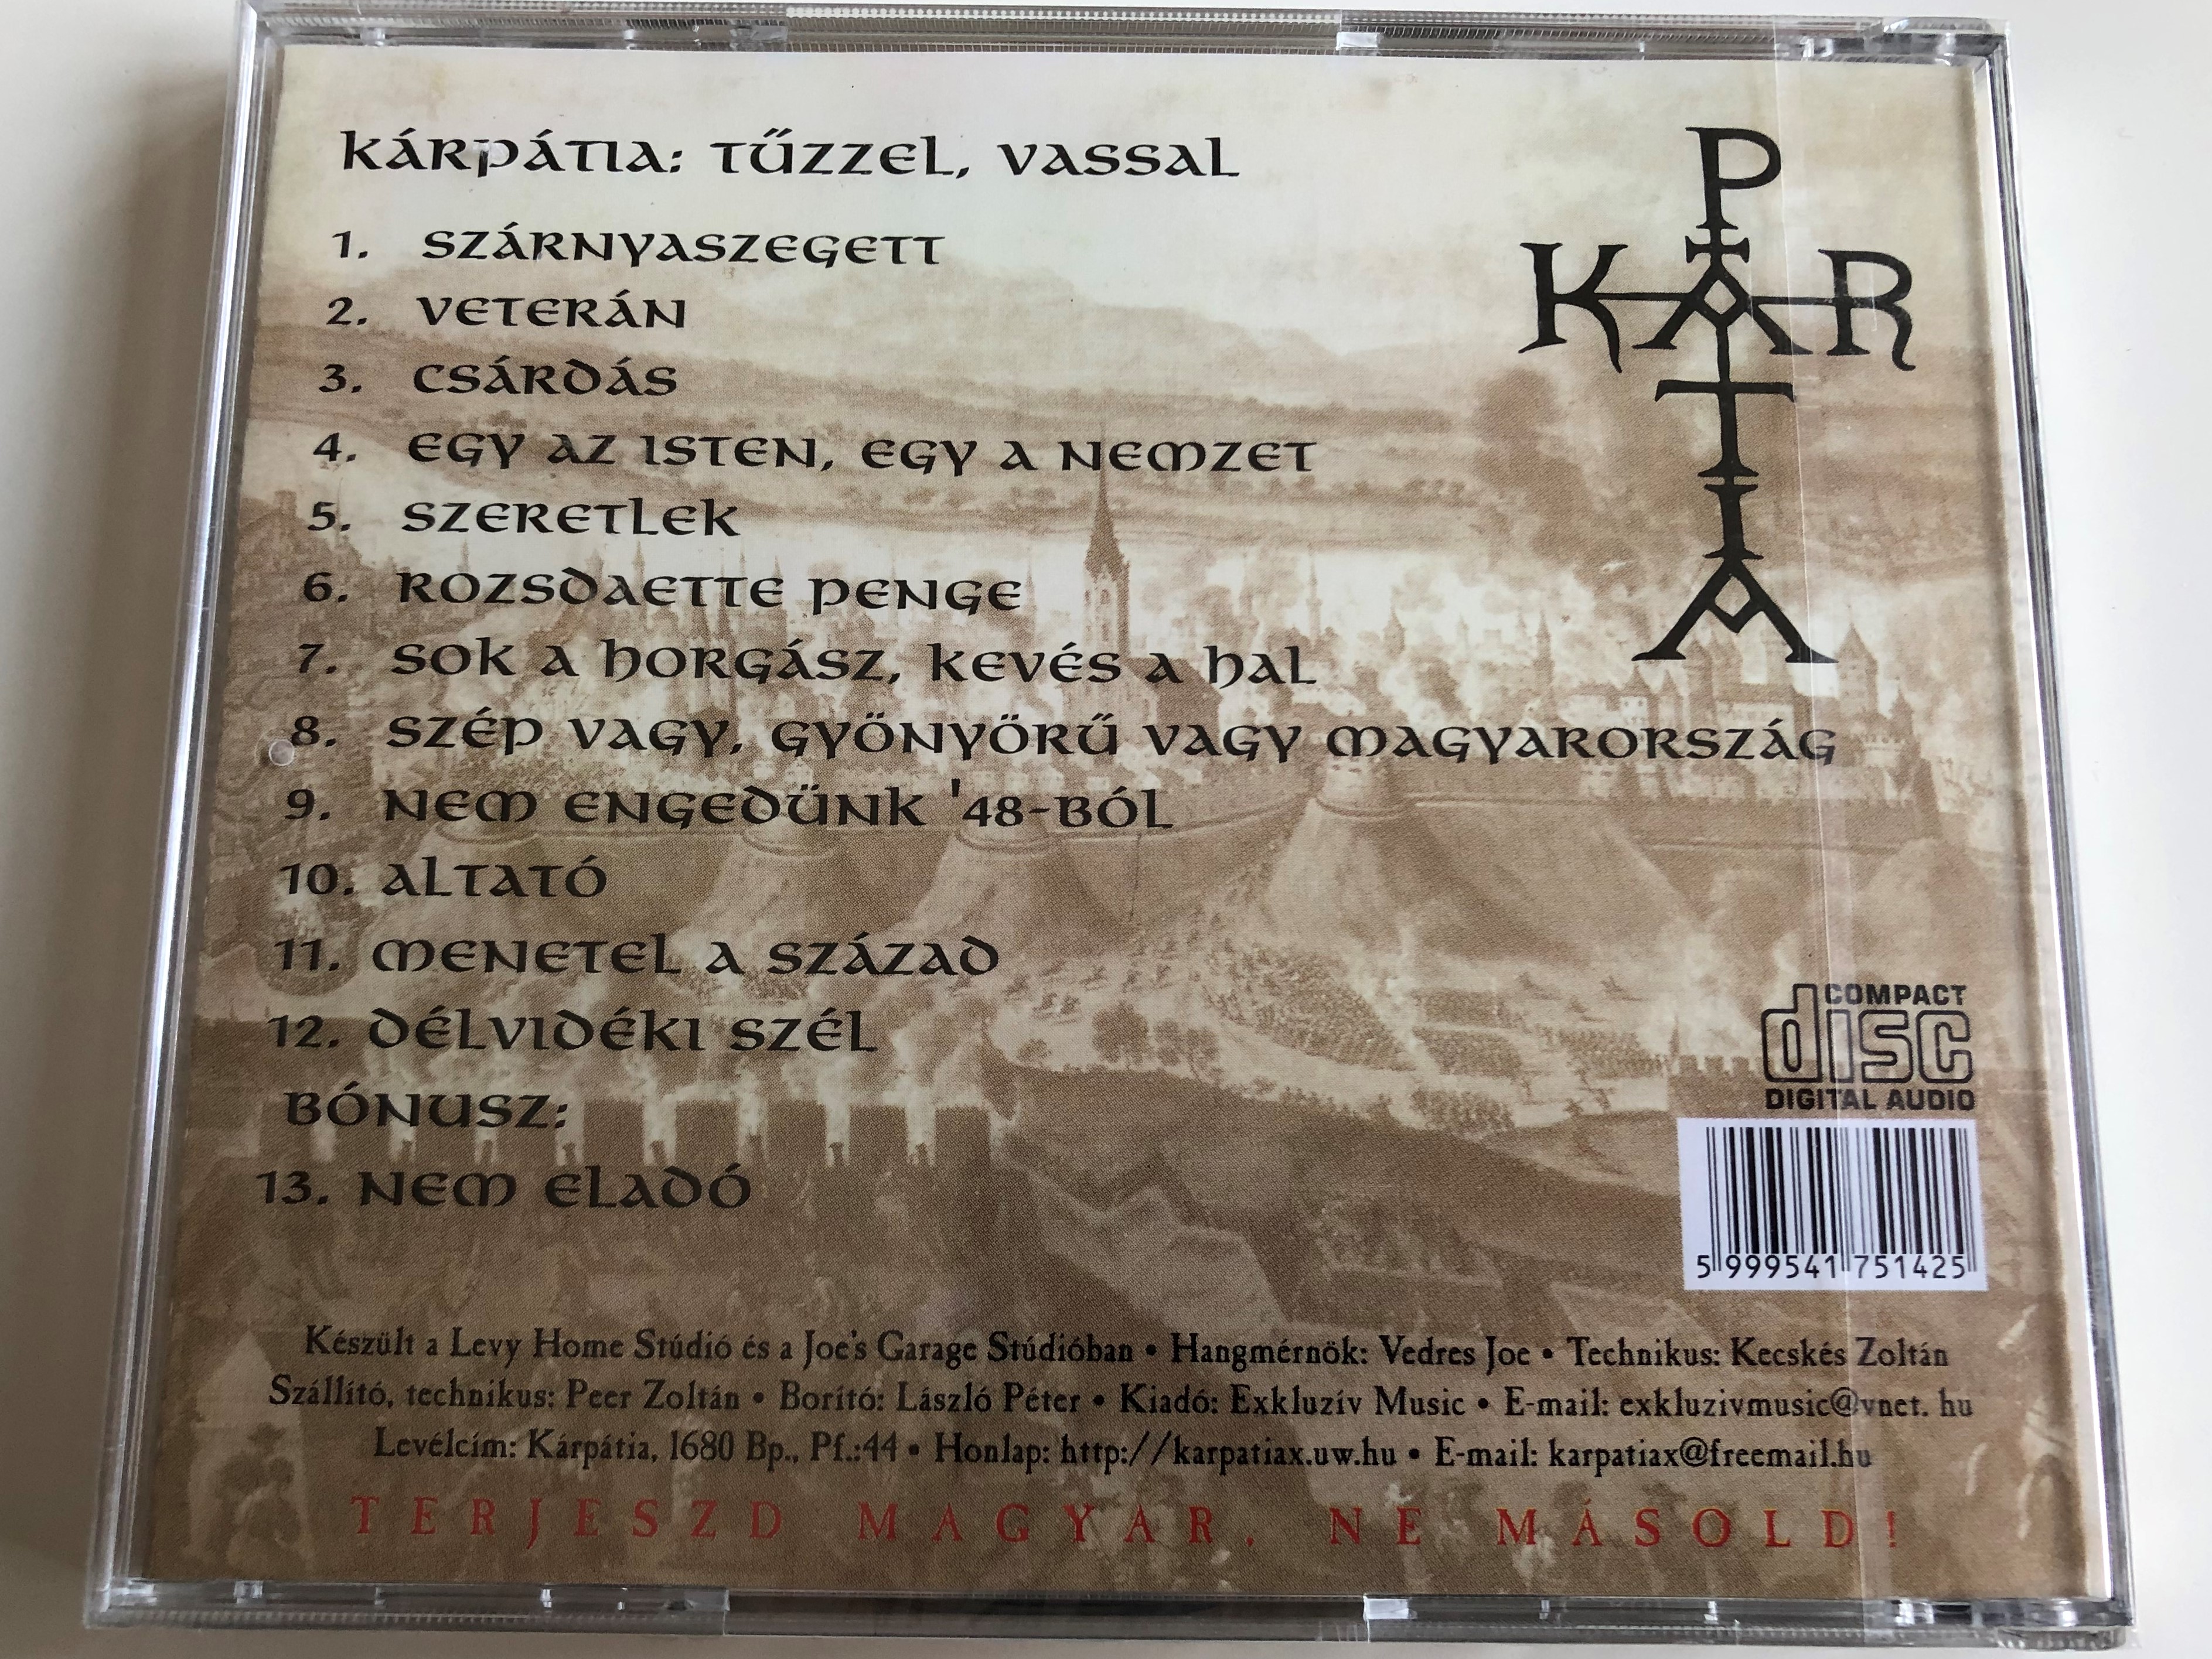 k-rp-tia-t-zzel-vassal-sz-rnyaszegett-veter-n-rozsdaette-penge-altat-menetel-a-sz-zad-d-lvid-ki-sz-l-audio-cd-2004-2-.jpg